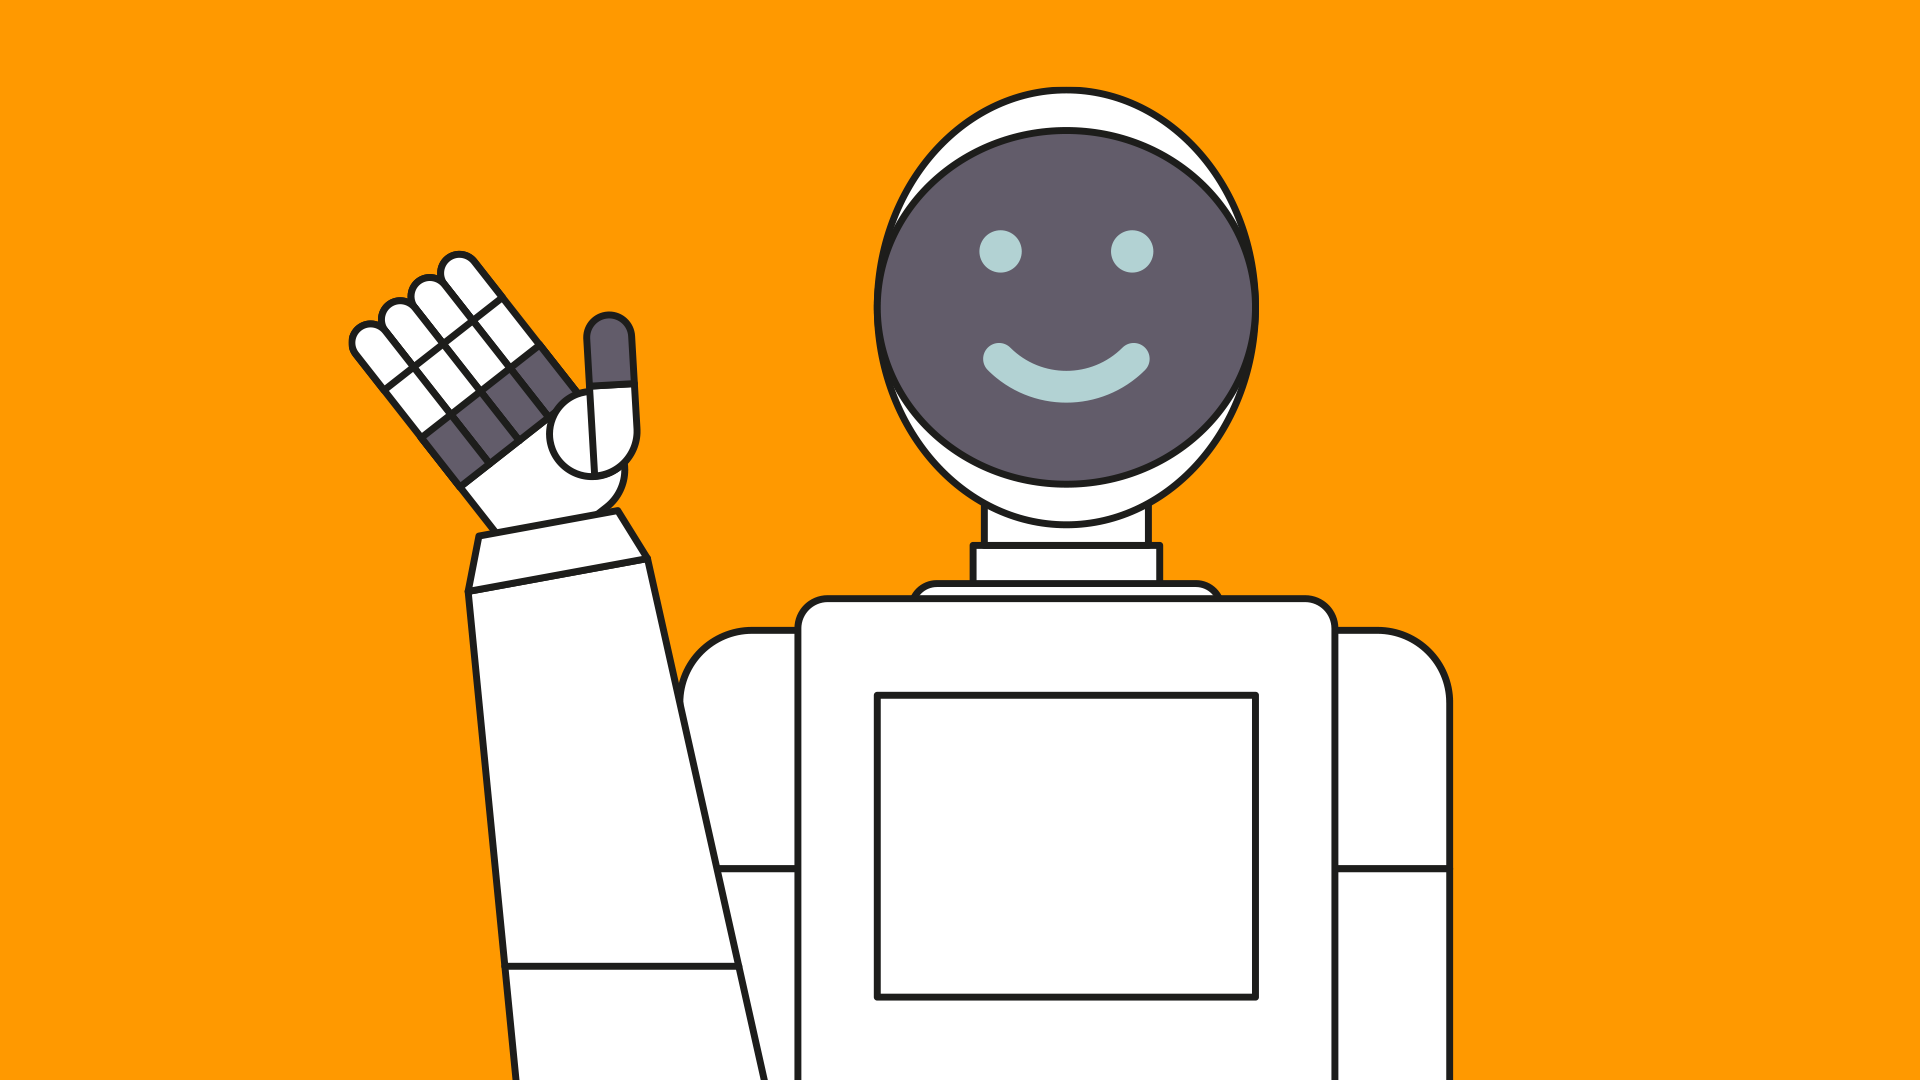 Illustration of a robot teacher